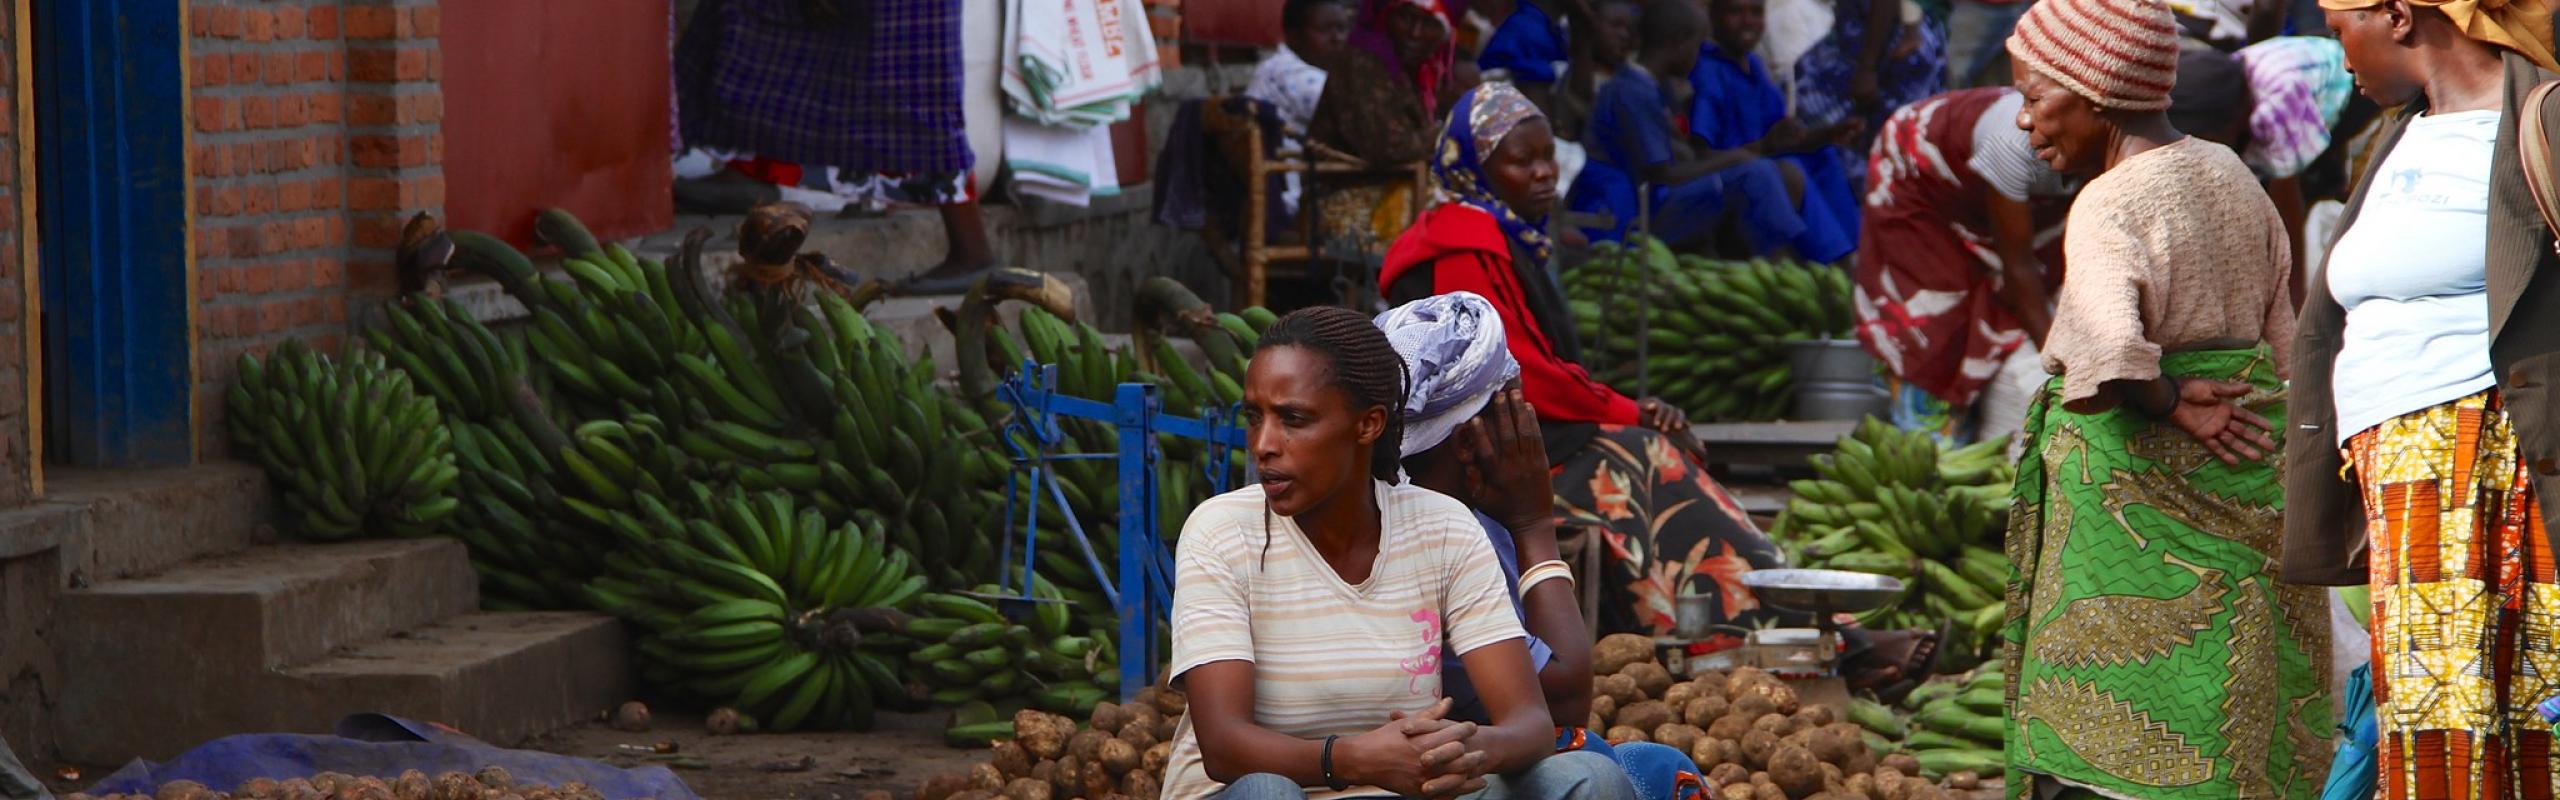 Vendors sitting among piles of potatoes and bananas in a marketplace, Musanze, Rwanda.